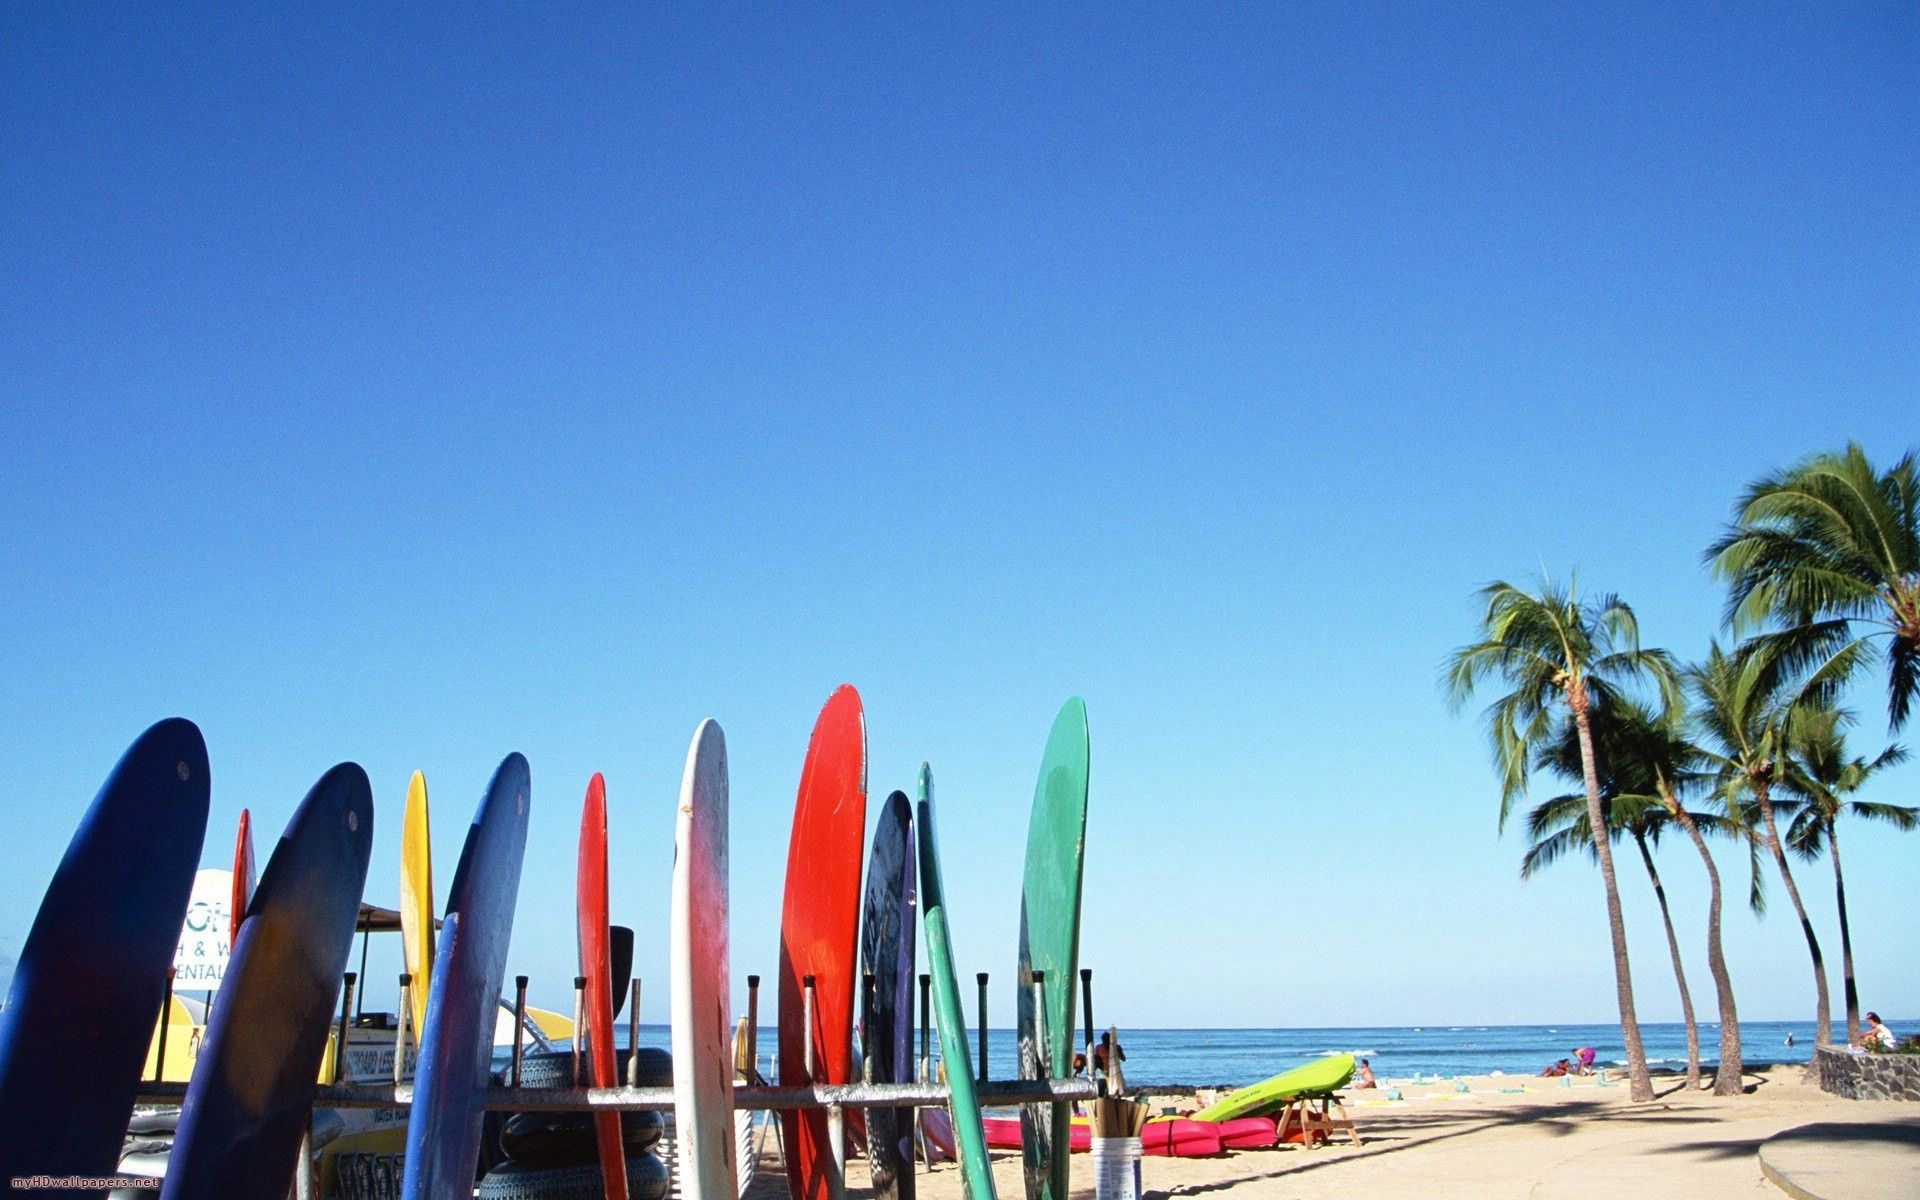 Tablas de surf fondos de pantalla | Tablas de surf fotos gratis